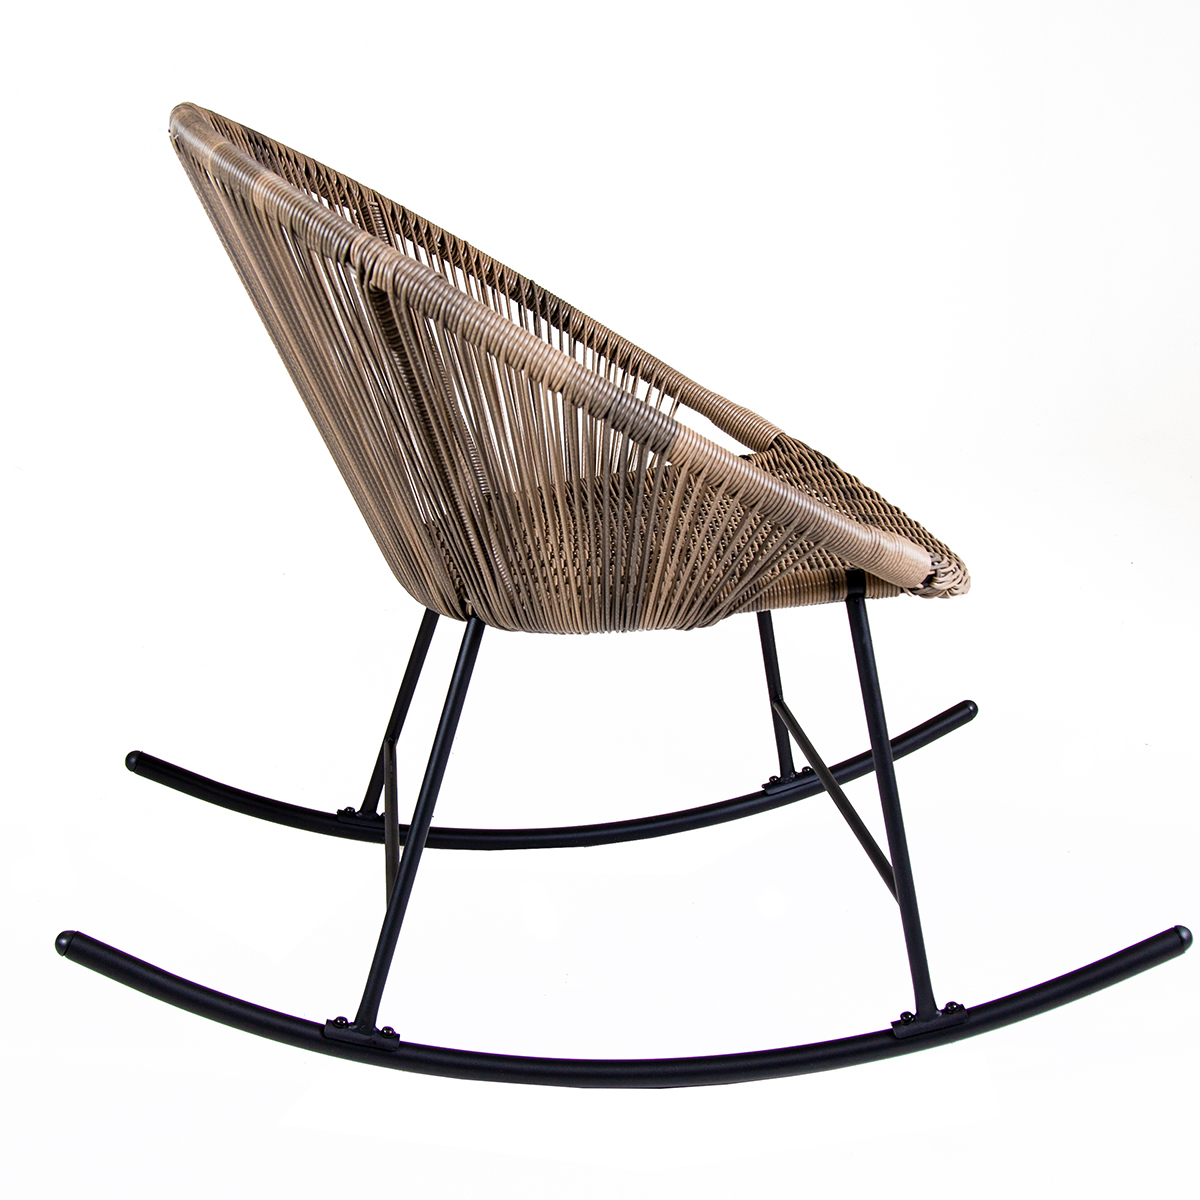 Charles Bentley Bali Rocking Outdoor Garden Patio Chair - Natural | eBay